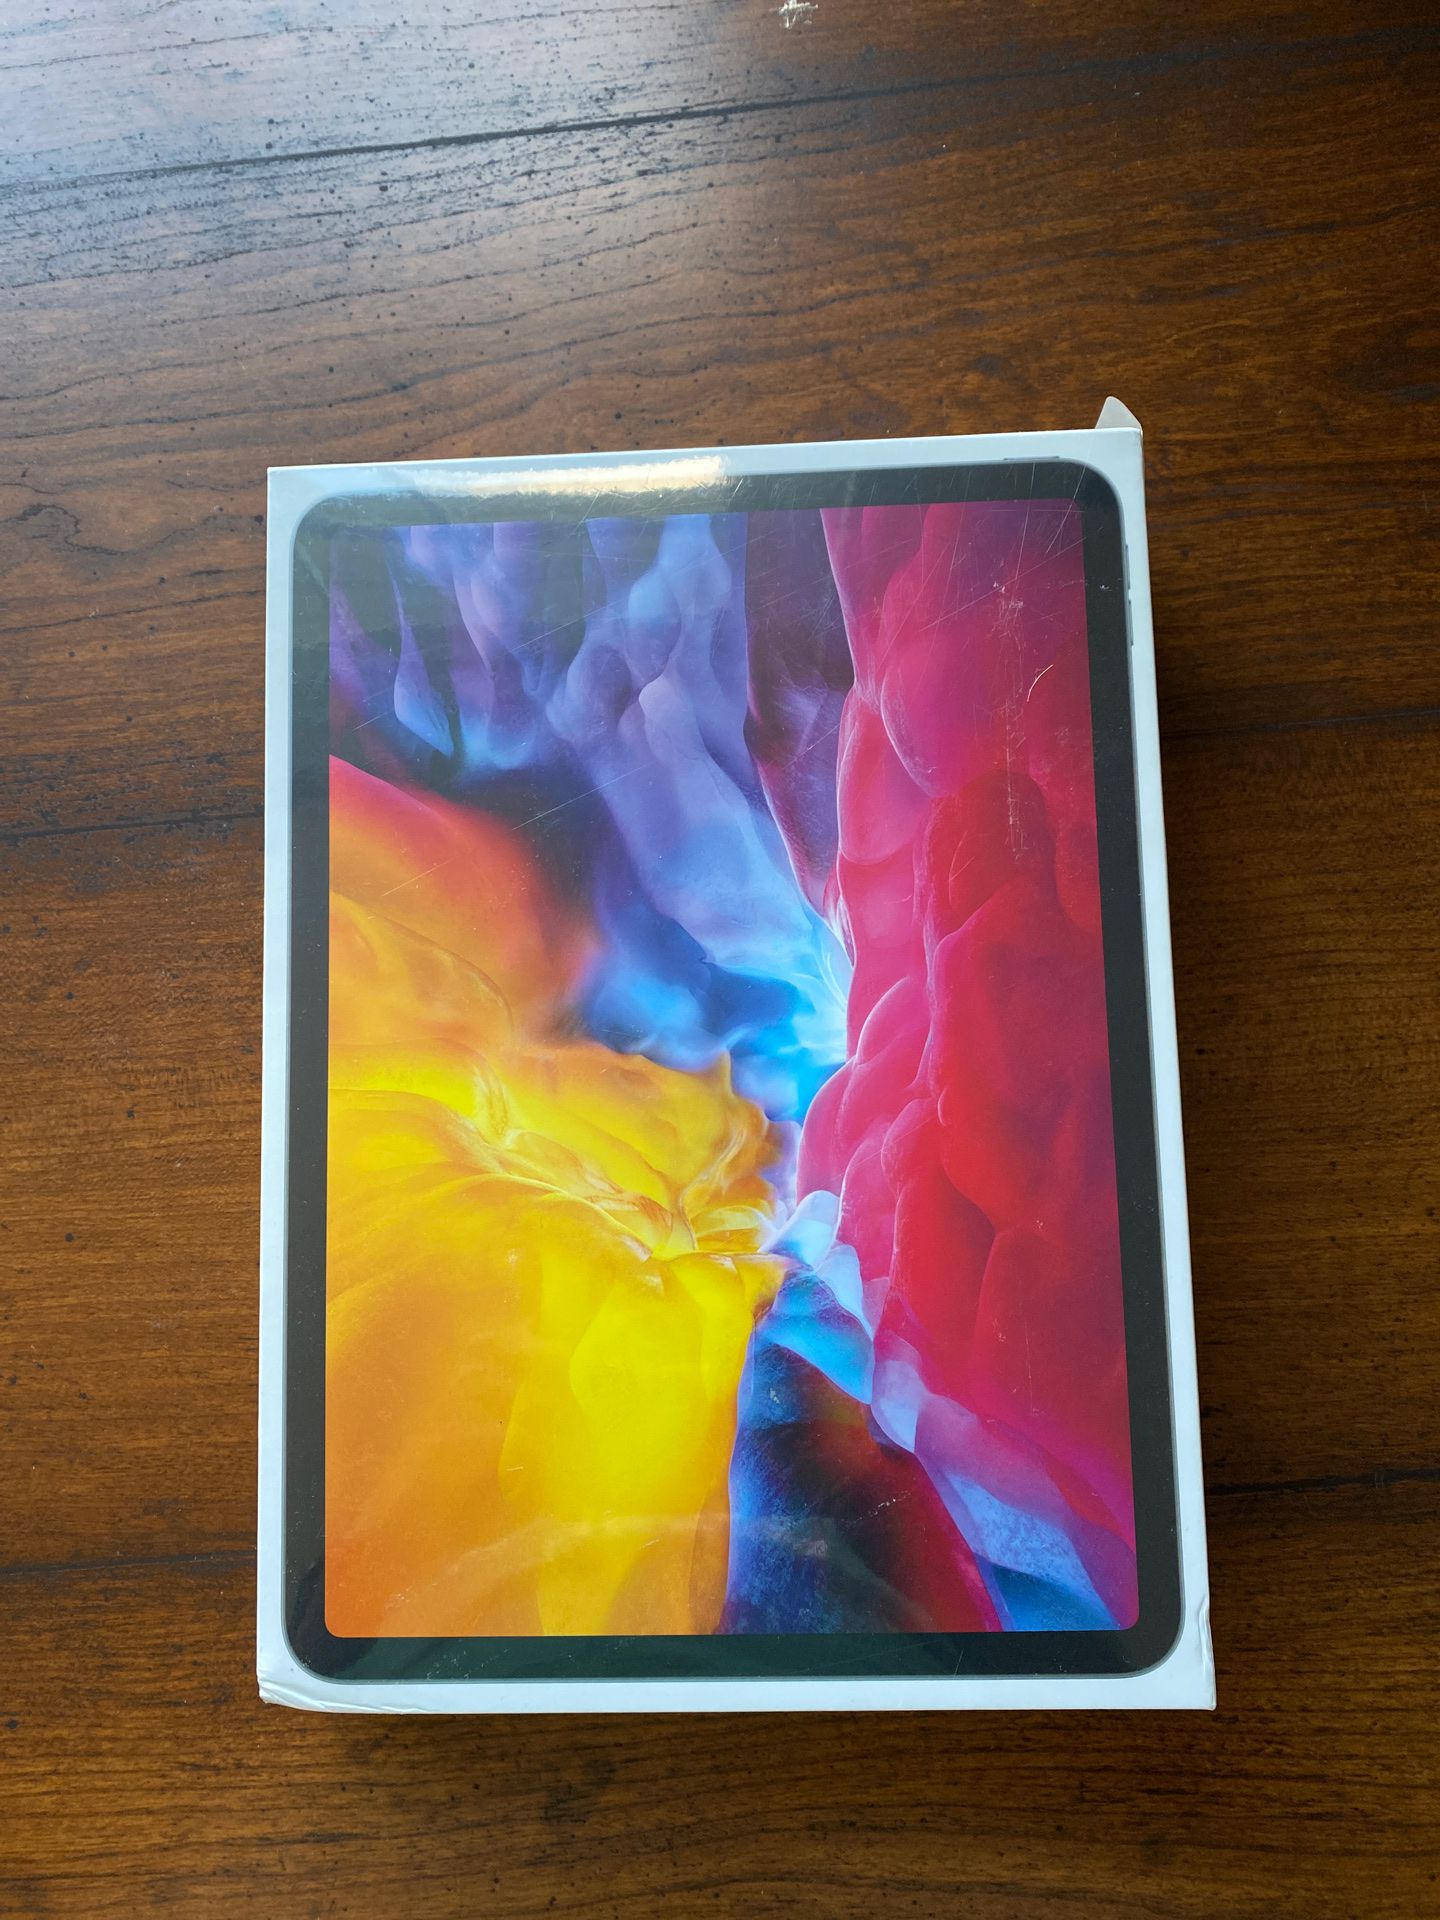 iPad Pro 11 inch 2nd Generation 128gb WiFi